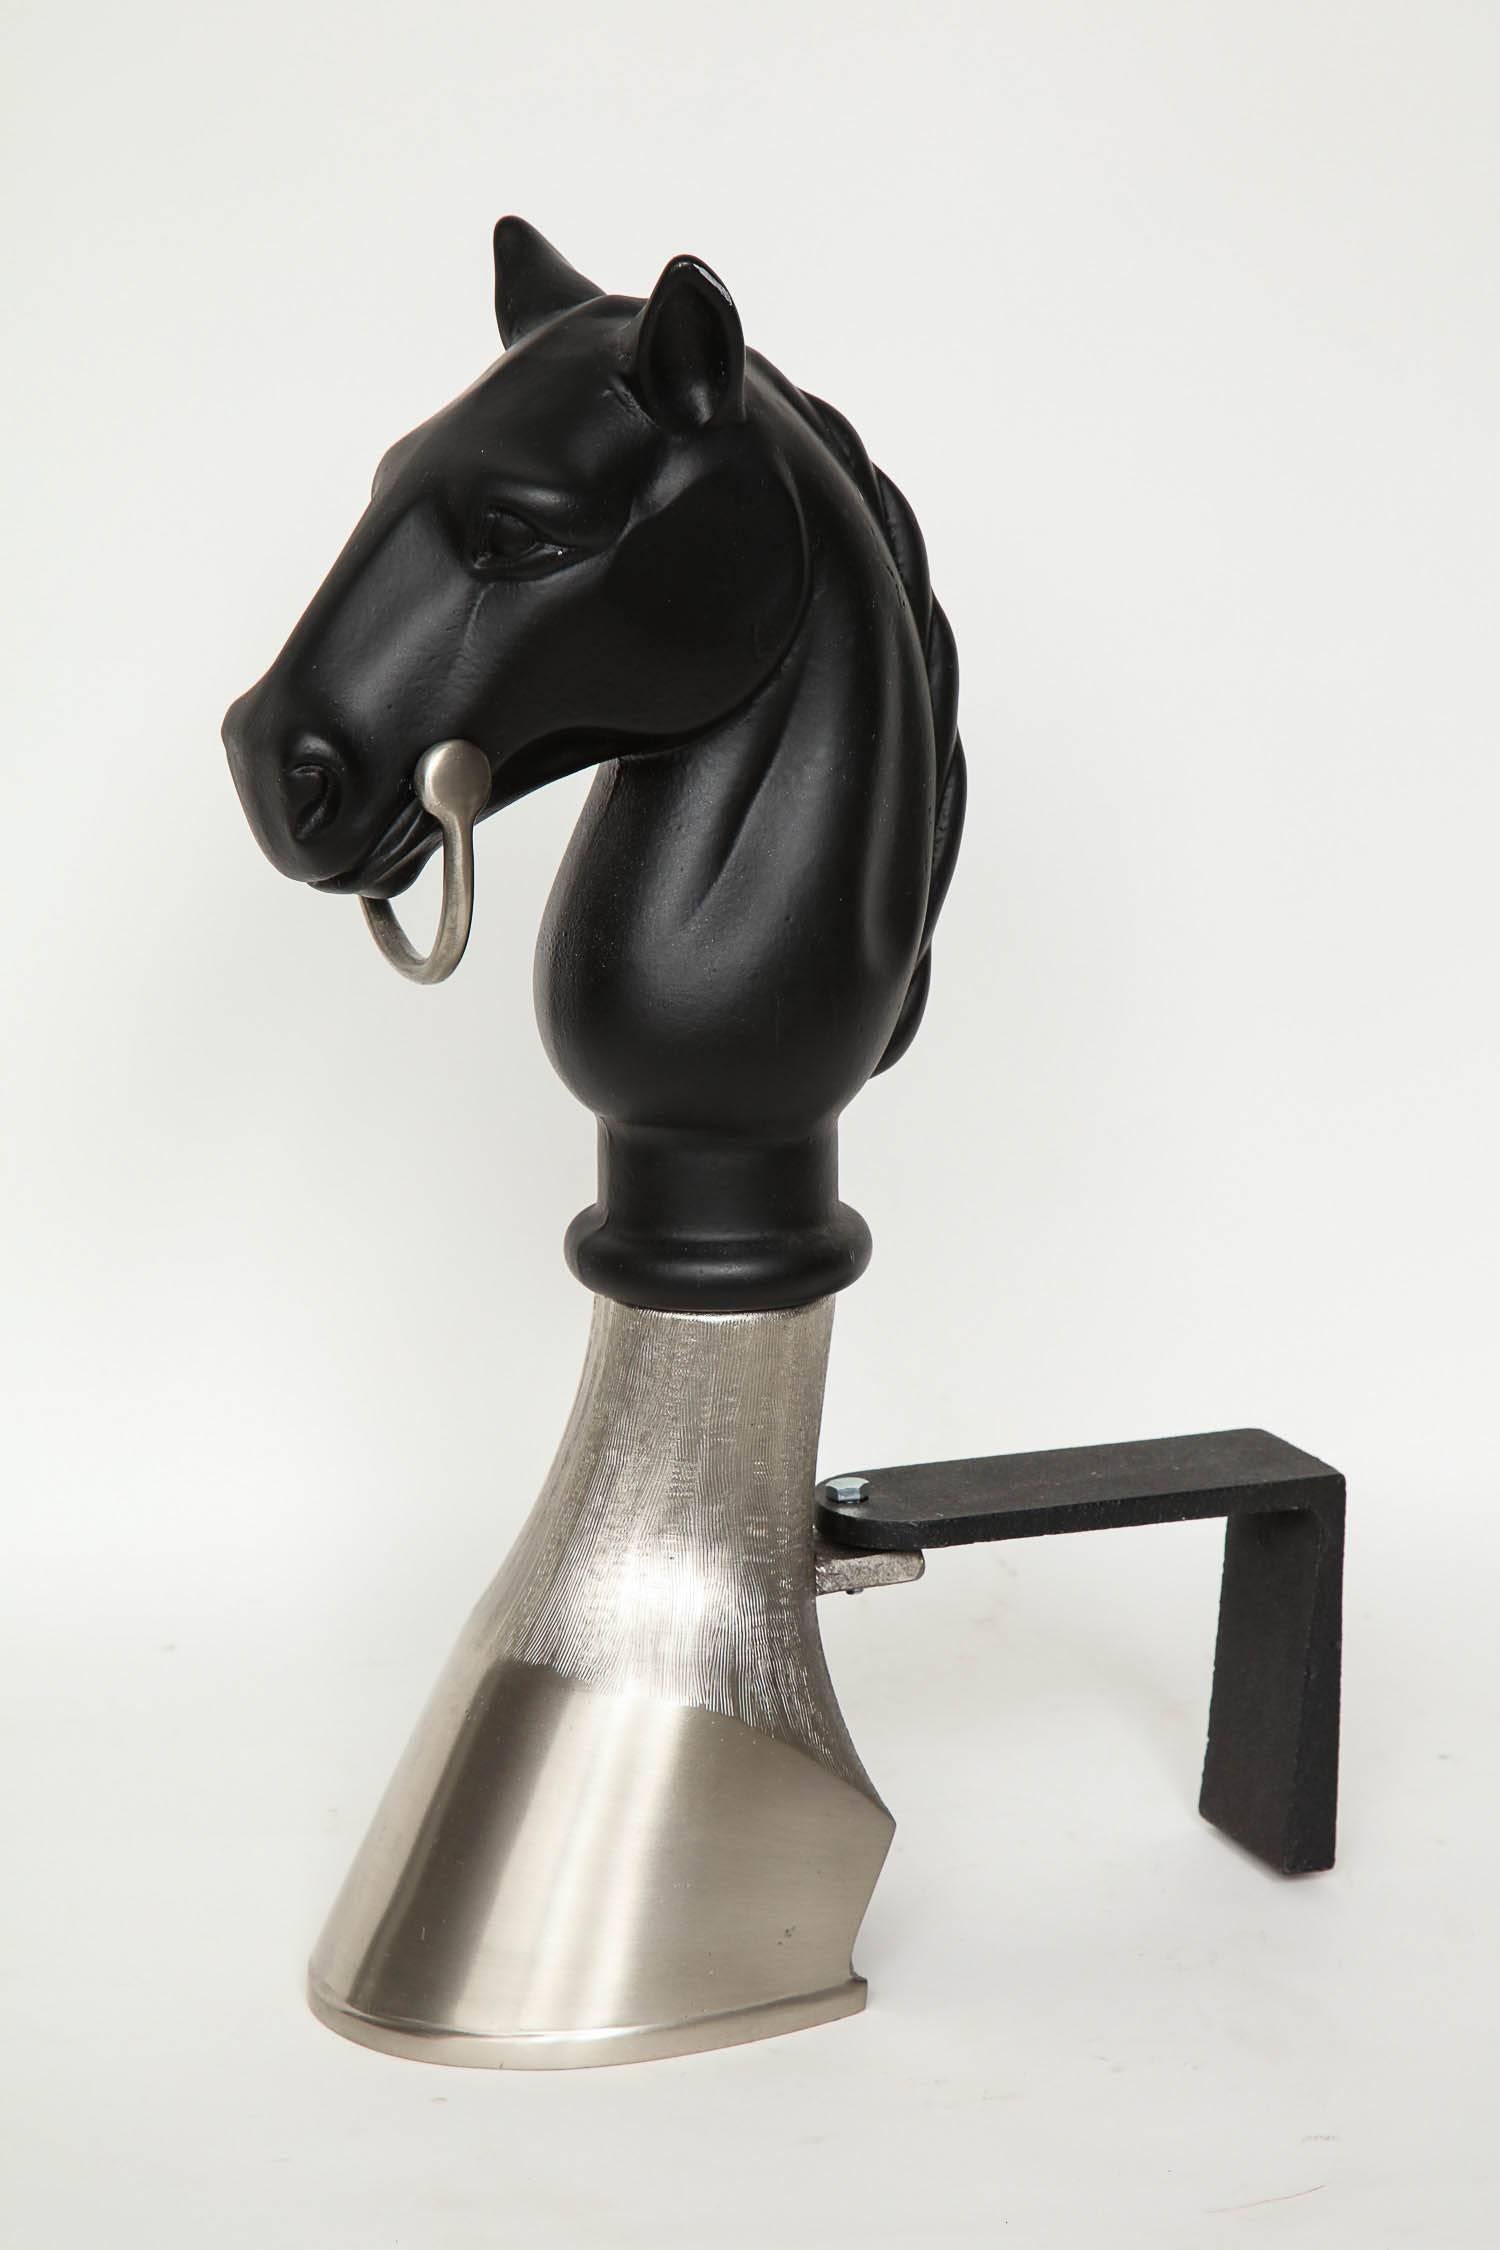 Striking pair of equestrian andirons with stylized black enamel heads resting on satin nickel hoof.